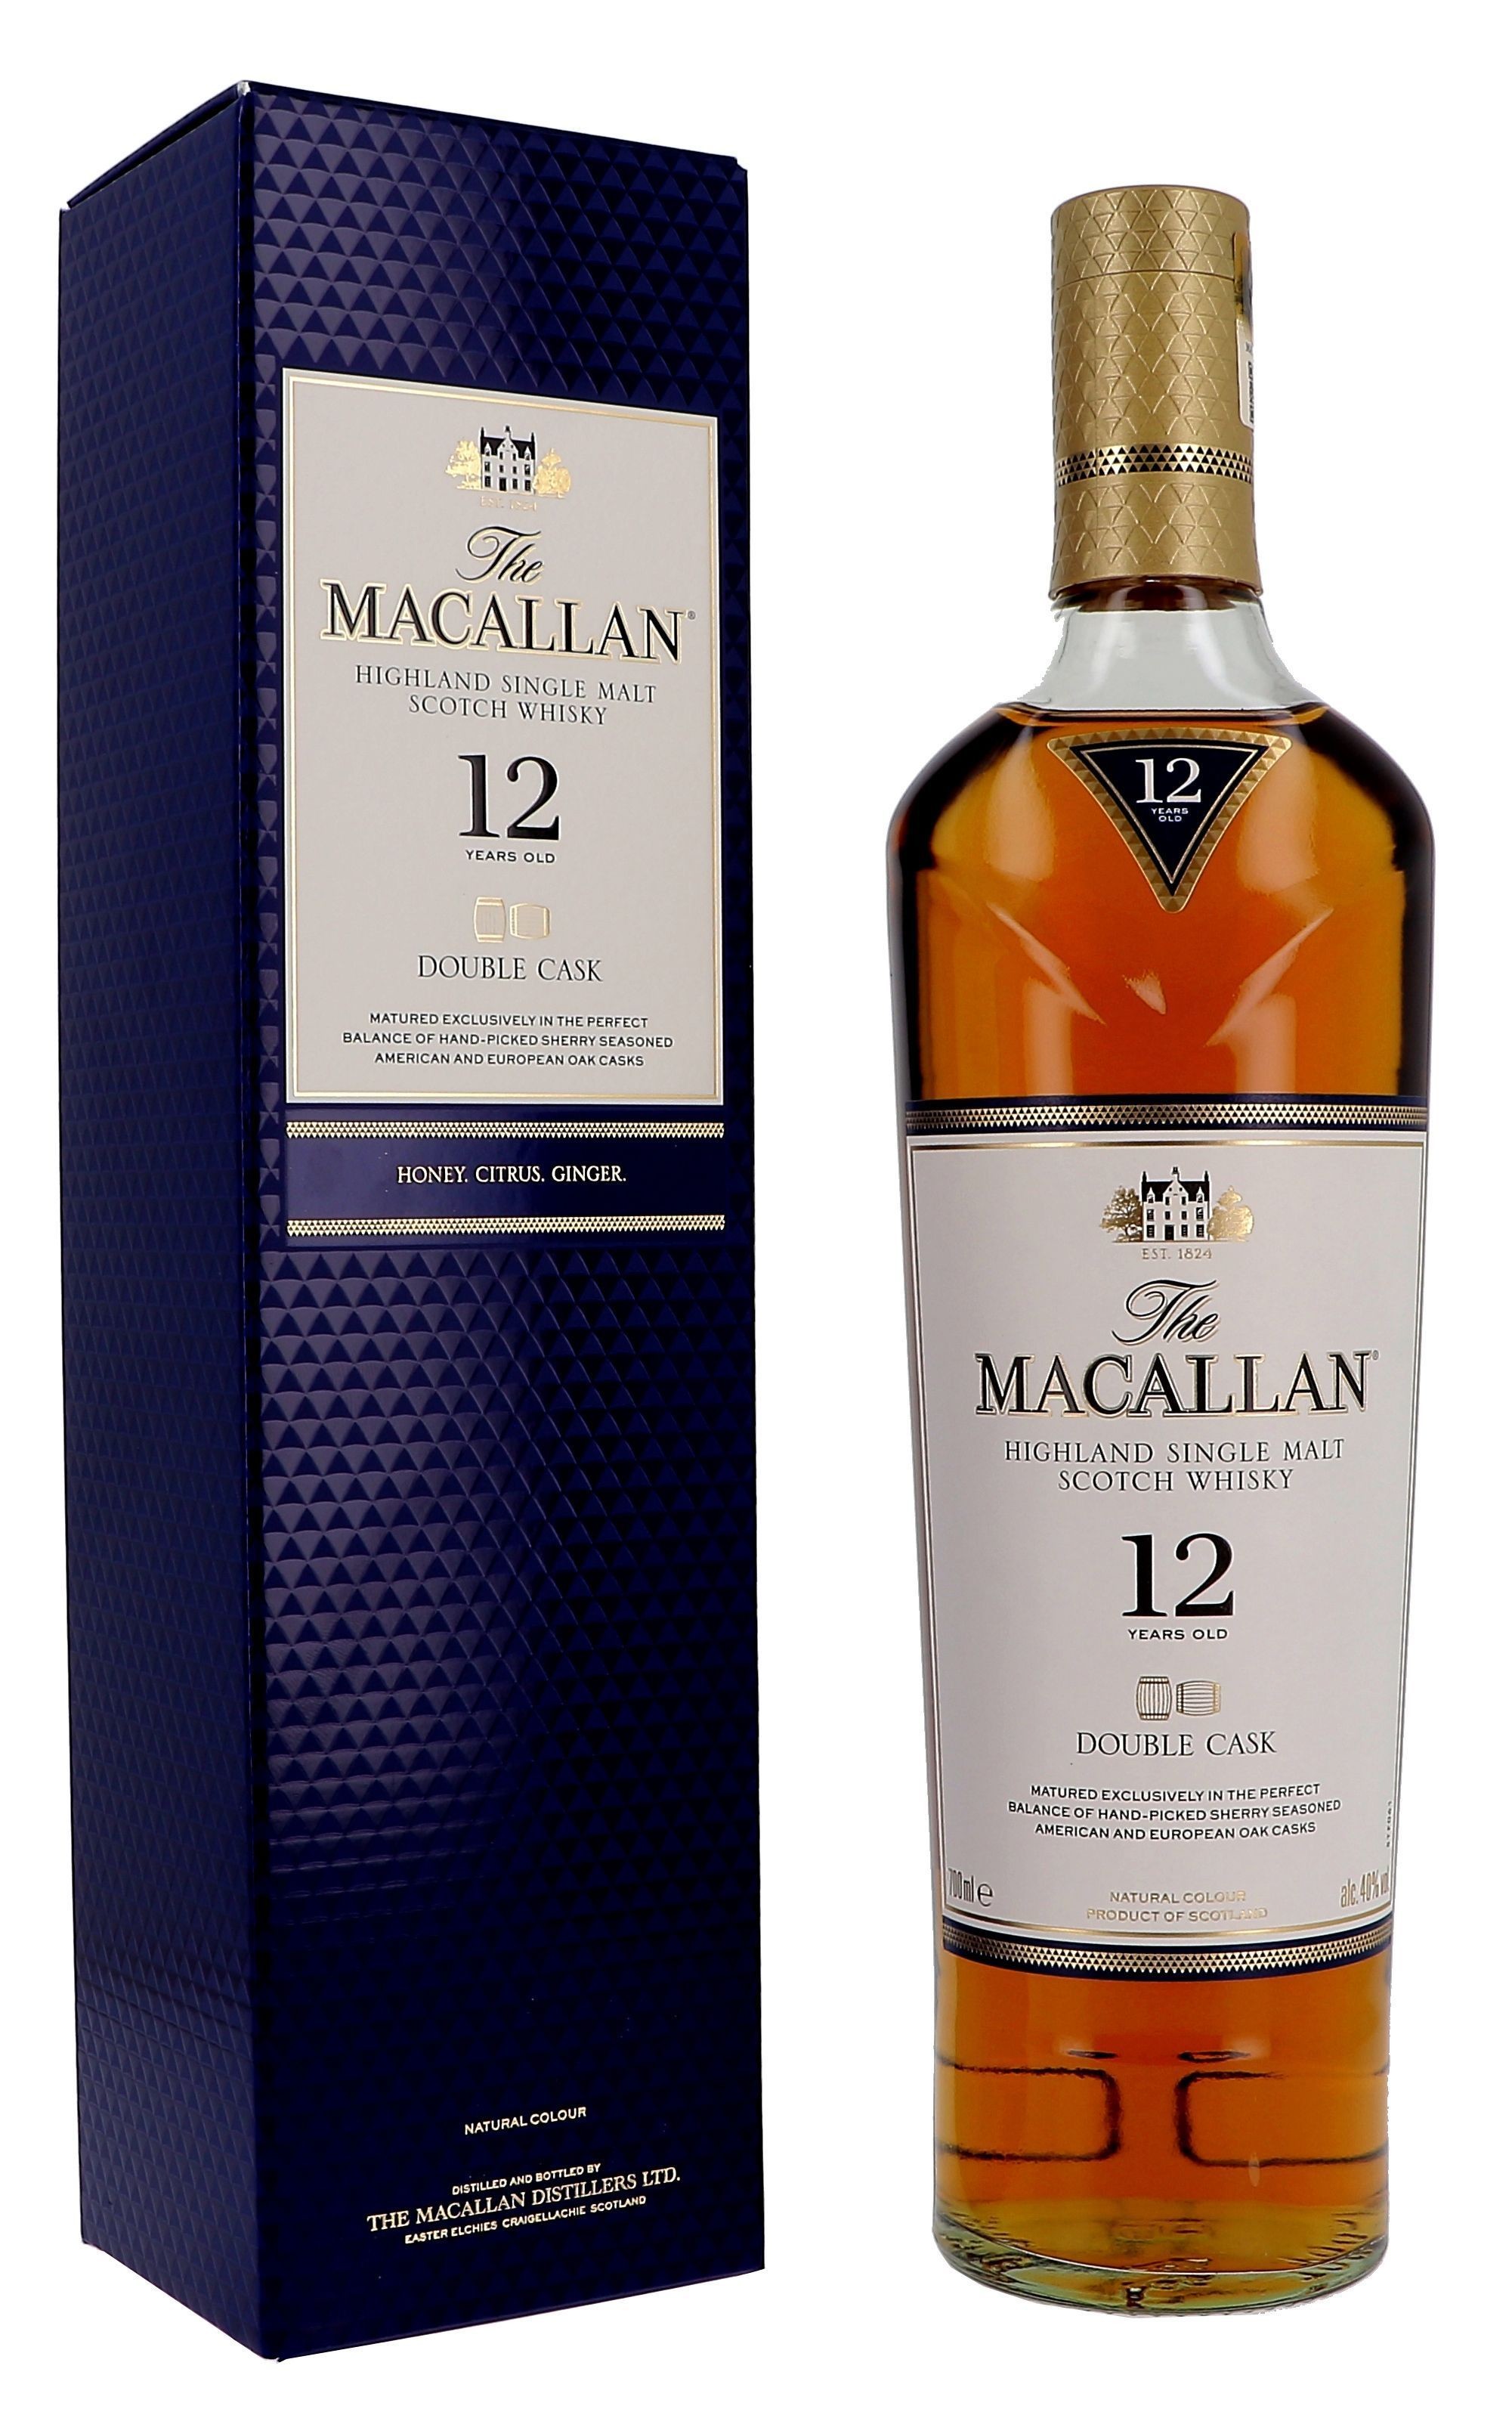 The Macallan 1824 Sienna 70cl 43% Highland Single Malt Scotch Whisky 